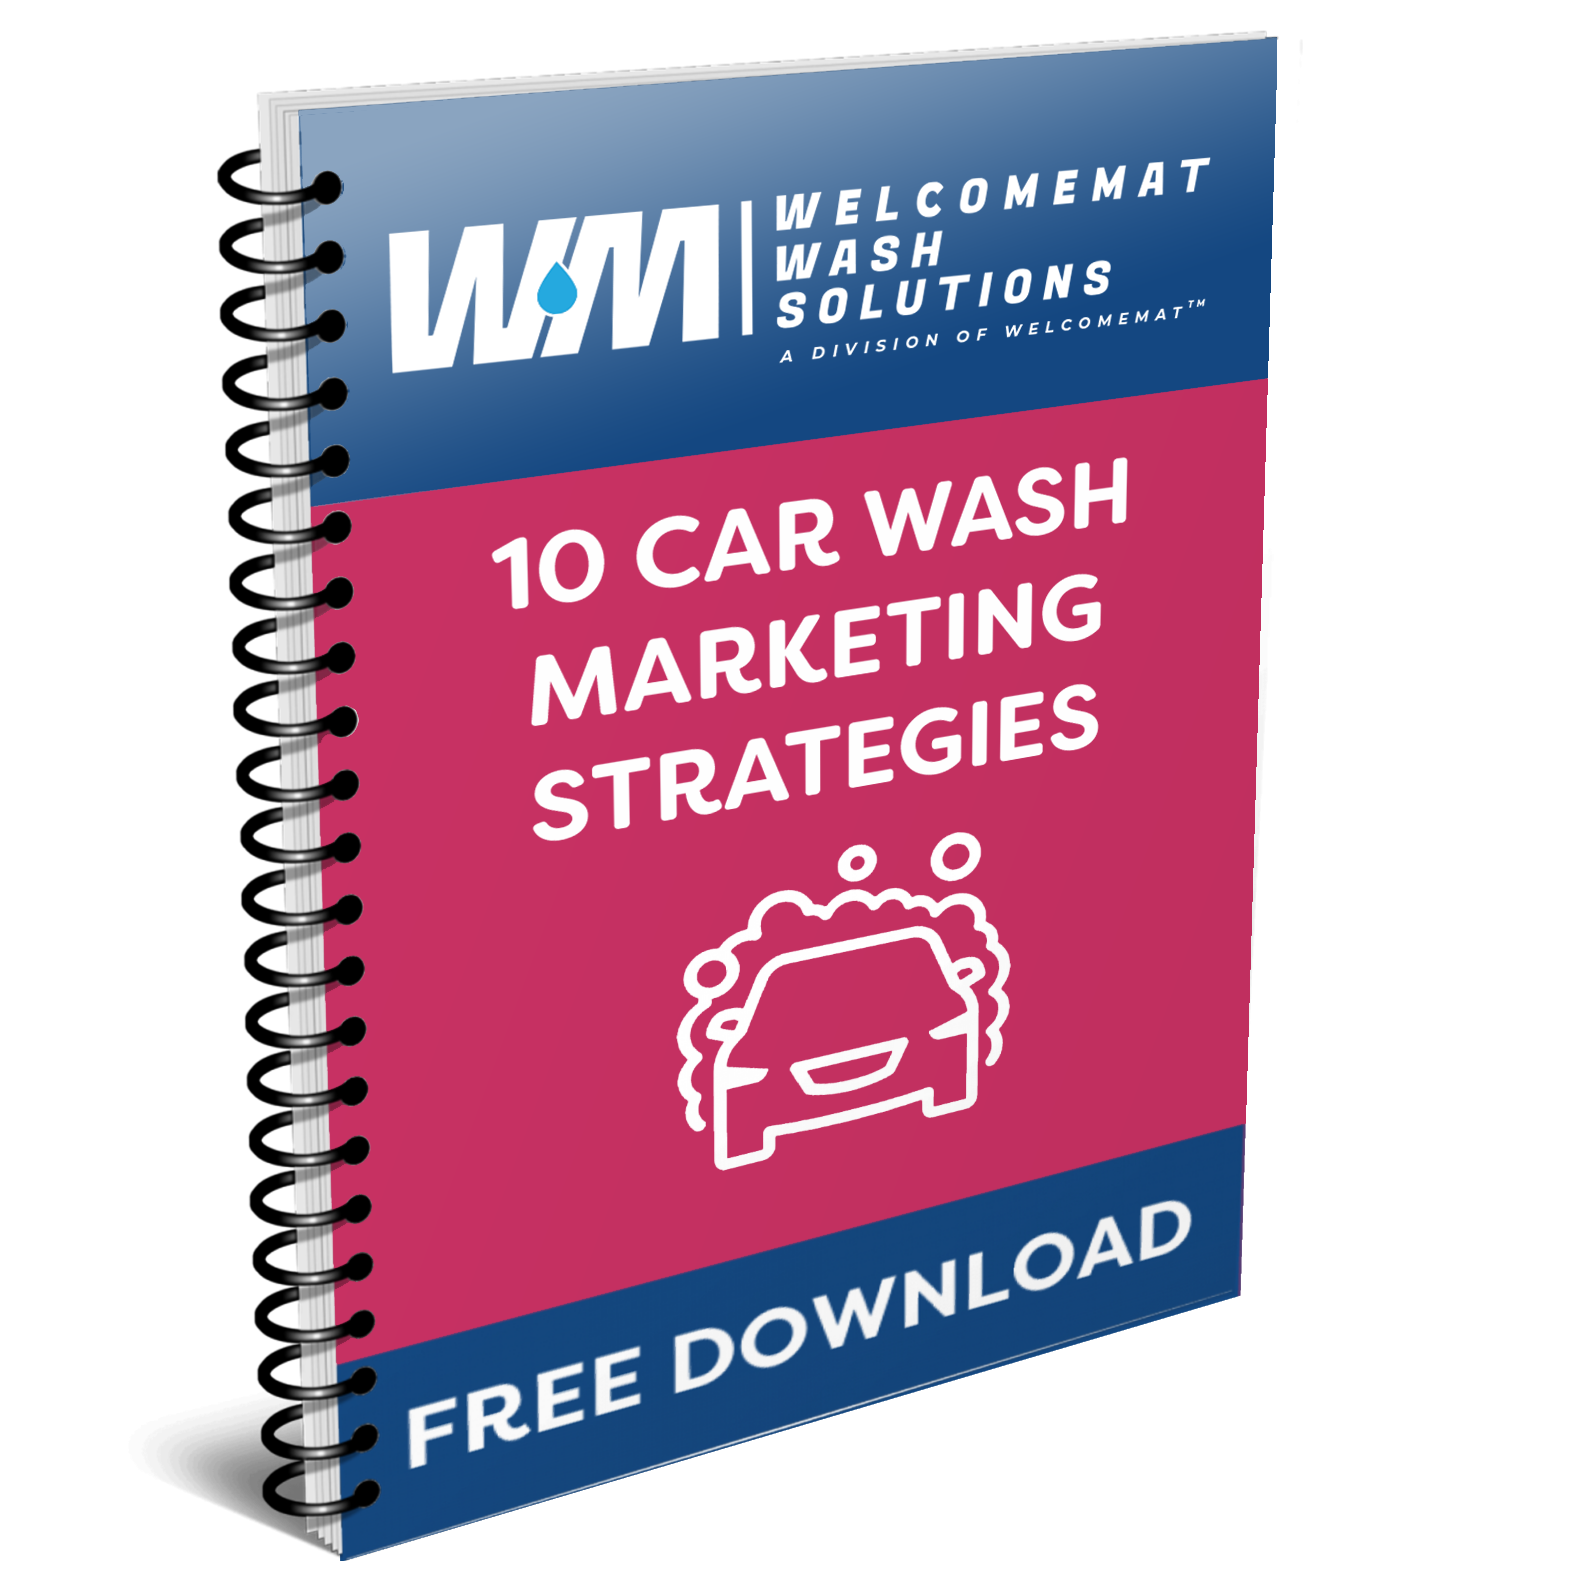 Car Wash Promotion Ideas - Ebook - Welcomemat